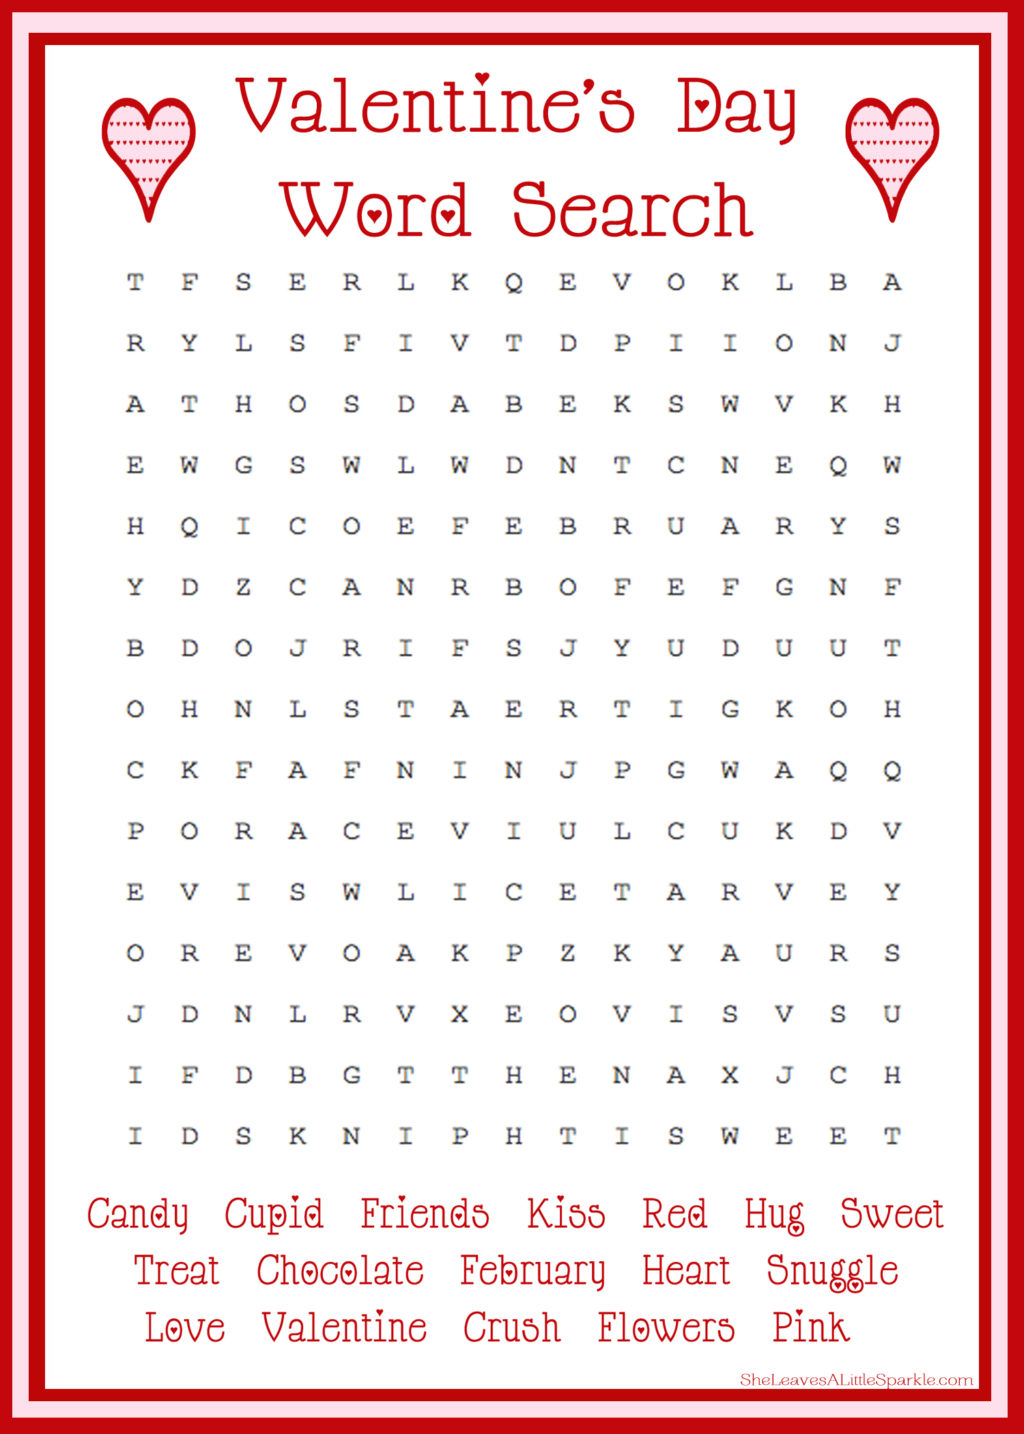 Day 8: Valentine's Day Word Search - Summer Adams